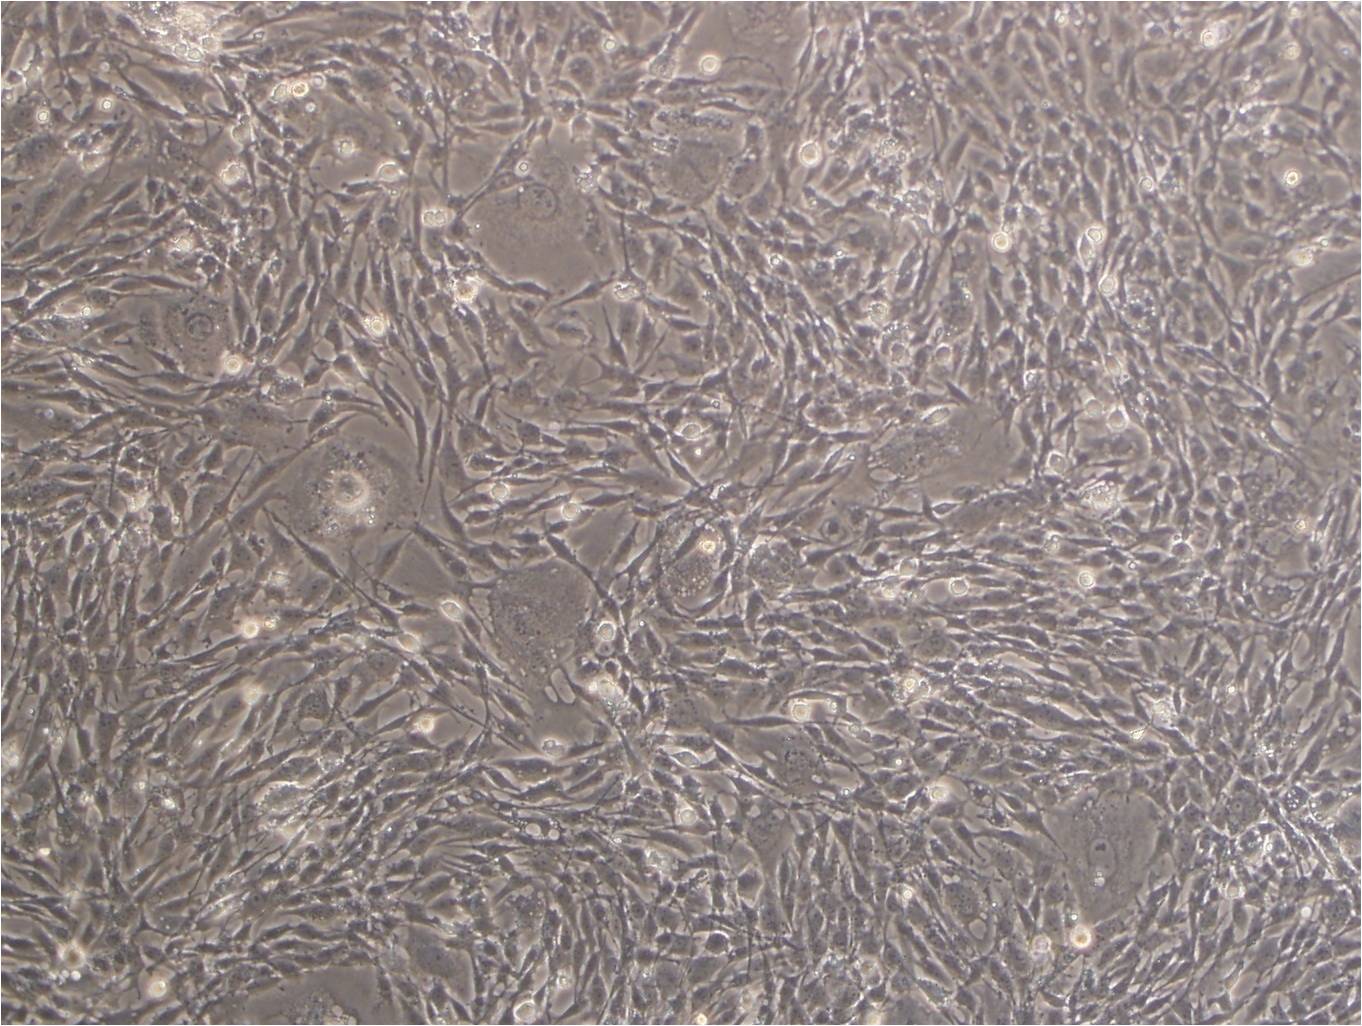 S91 Cell|小鼠黑色素瘤细胞,S91 Cell